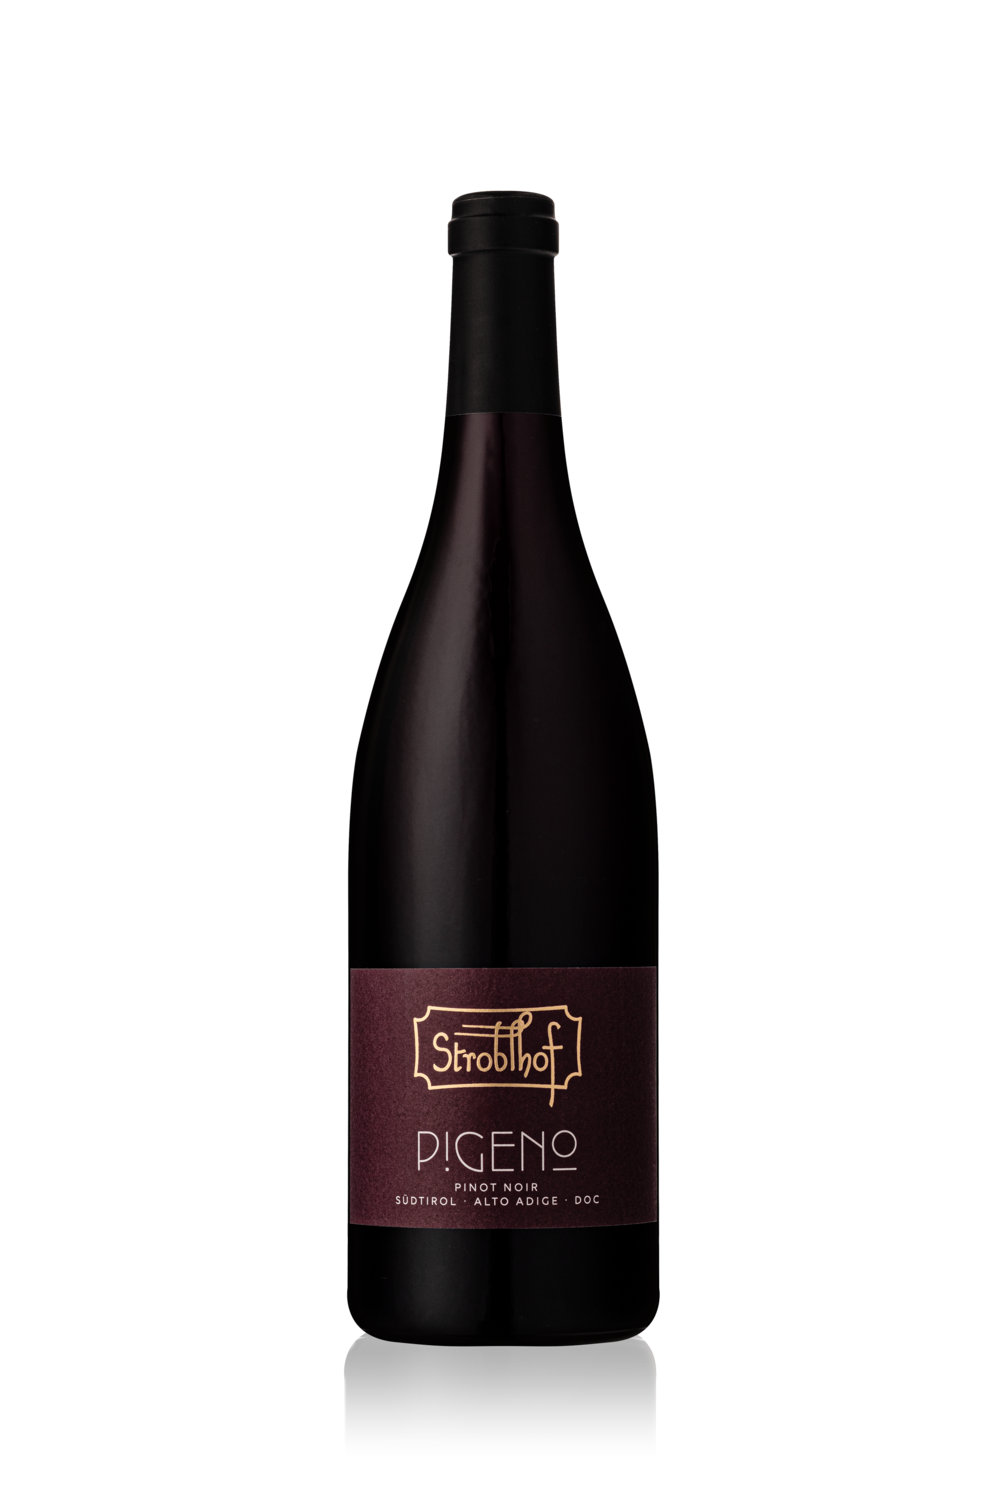 P!geno – South Tyrolean Pinot Noir